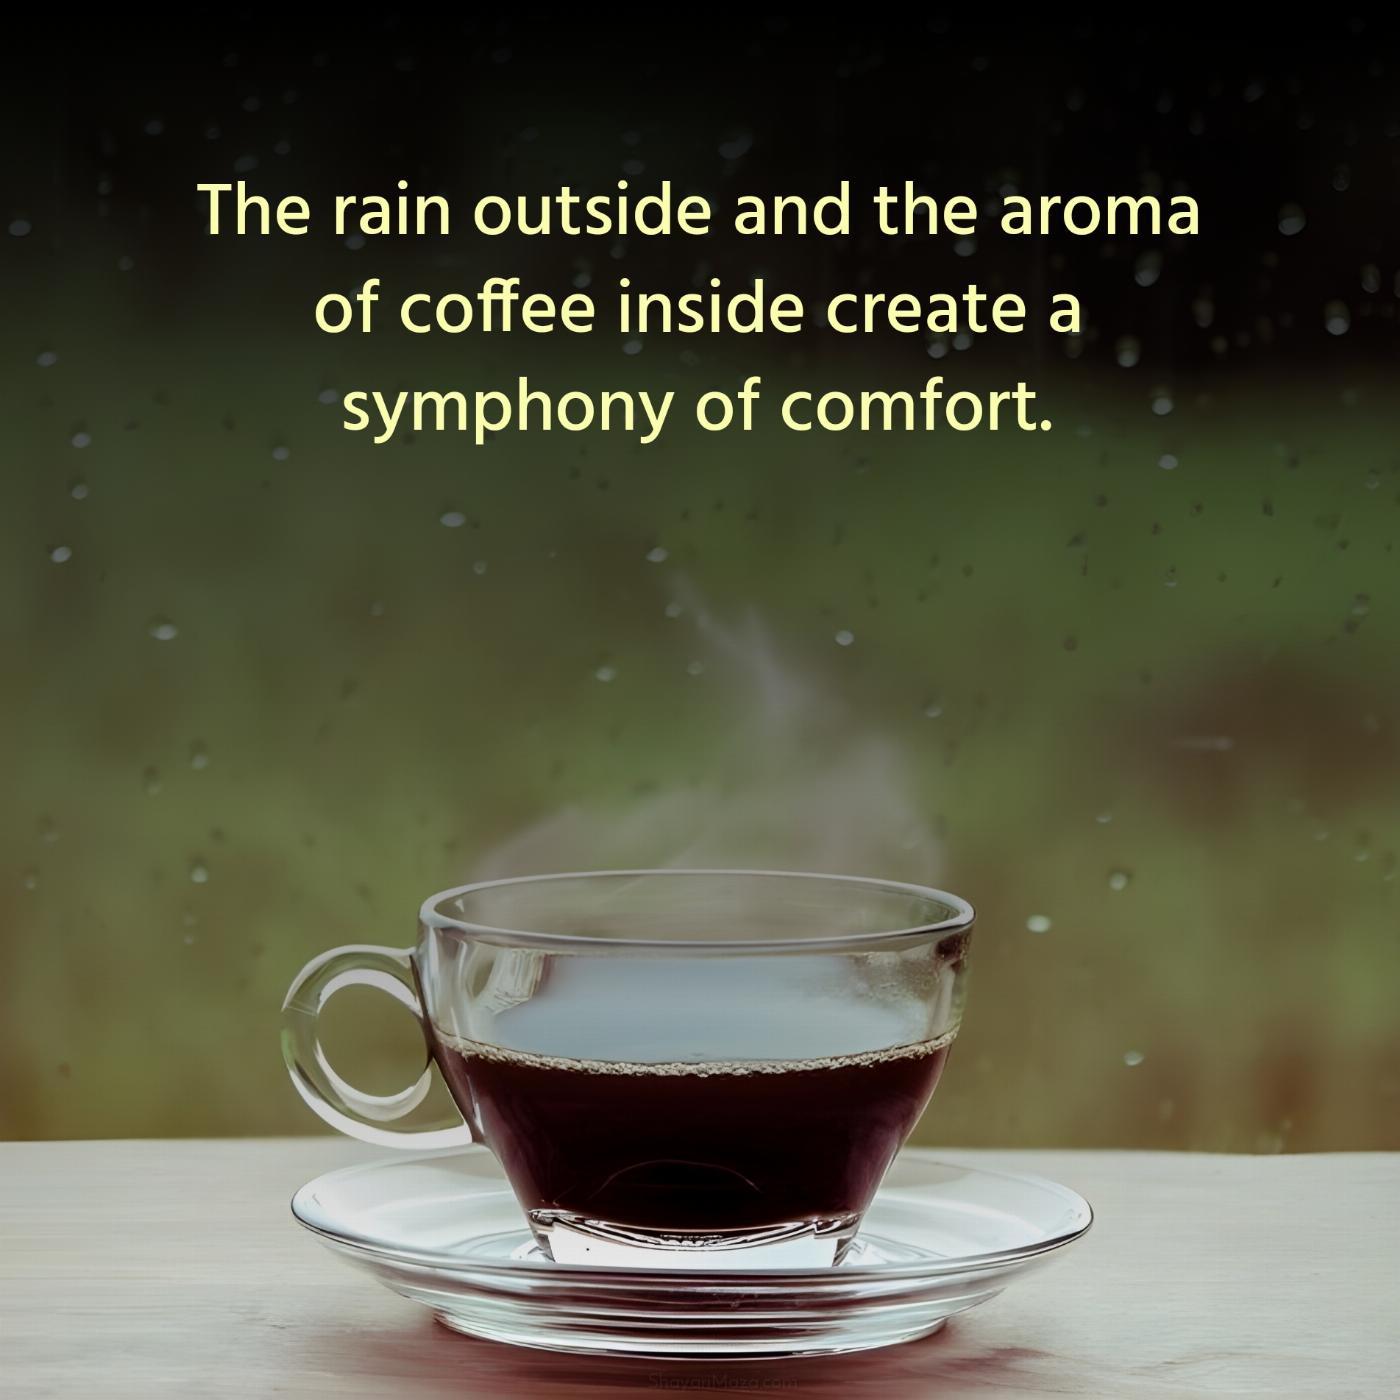 The rain outside and the aroma of coffee inside create a symphony